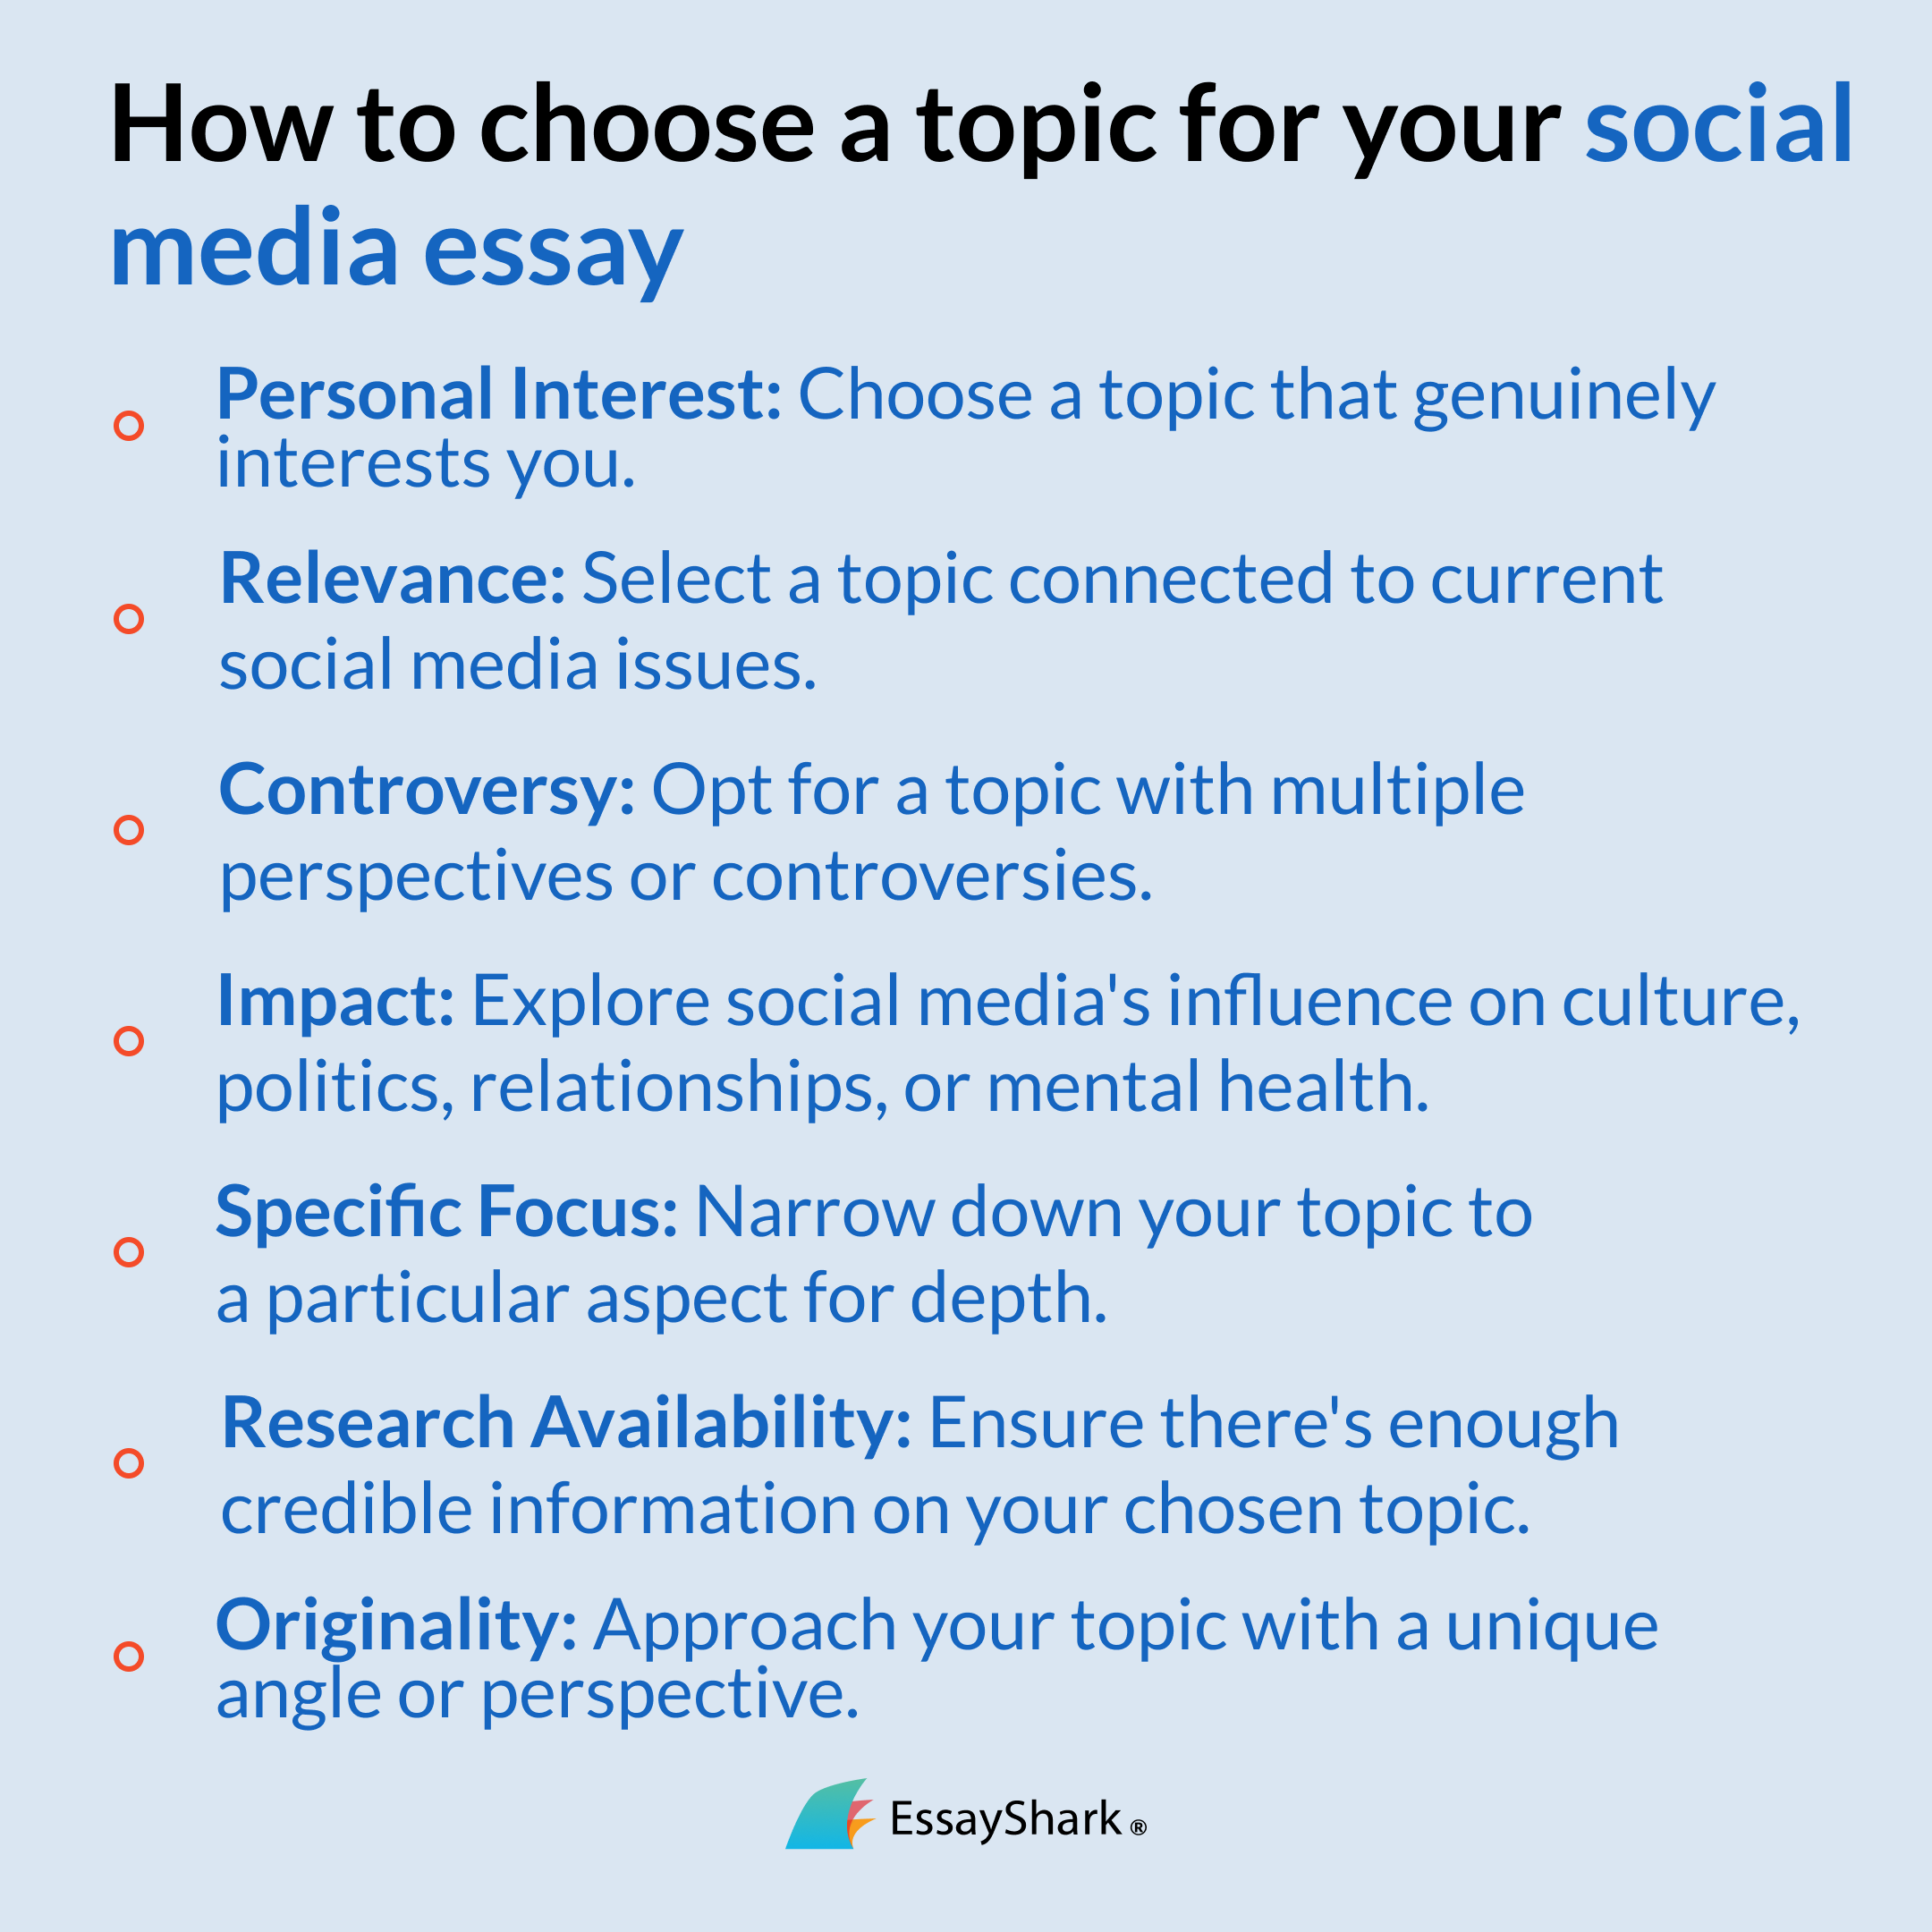 how to choose social media essay topic
